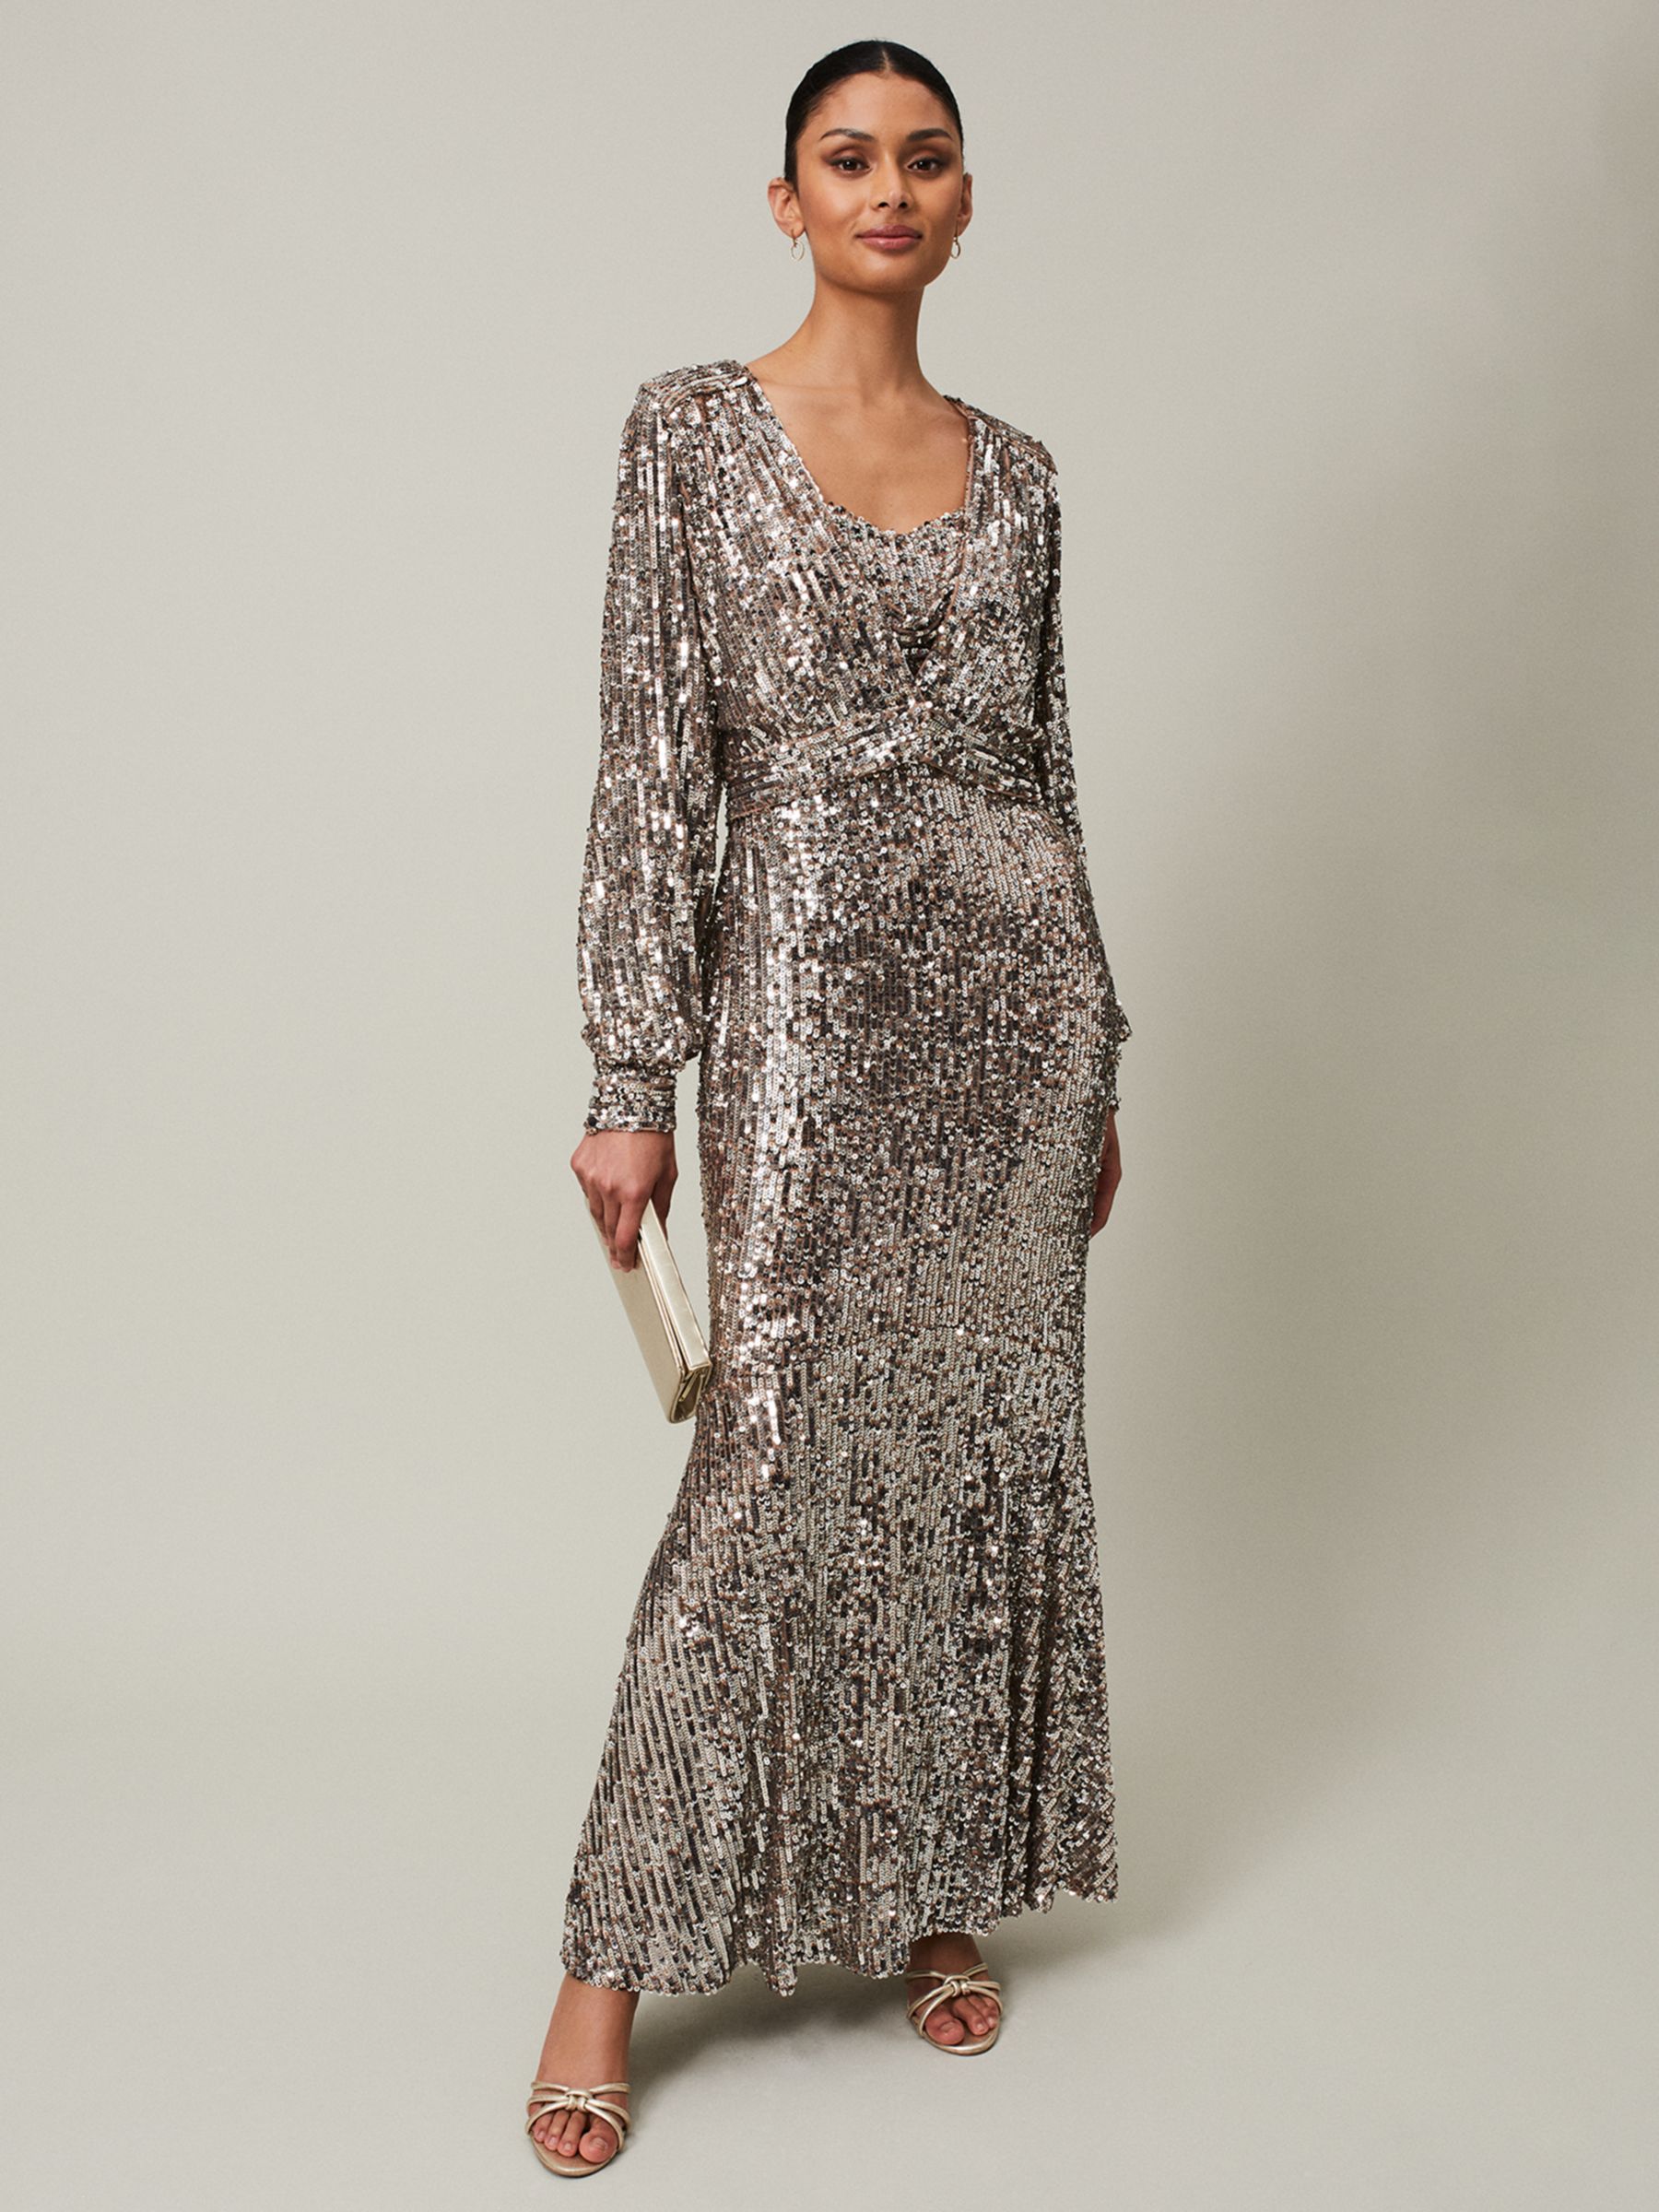 Phase Eight Jaylin Sequin Stripe Maxi Dress, Black/Silver